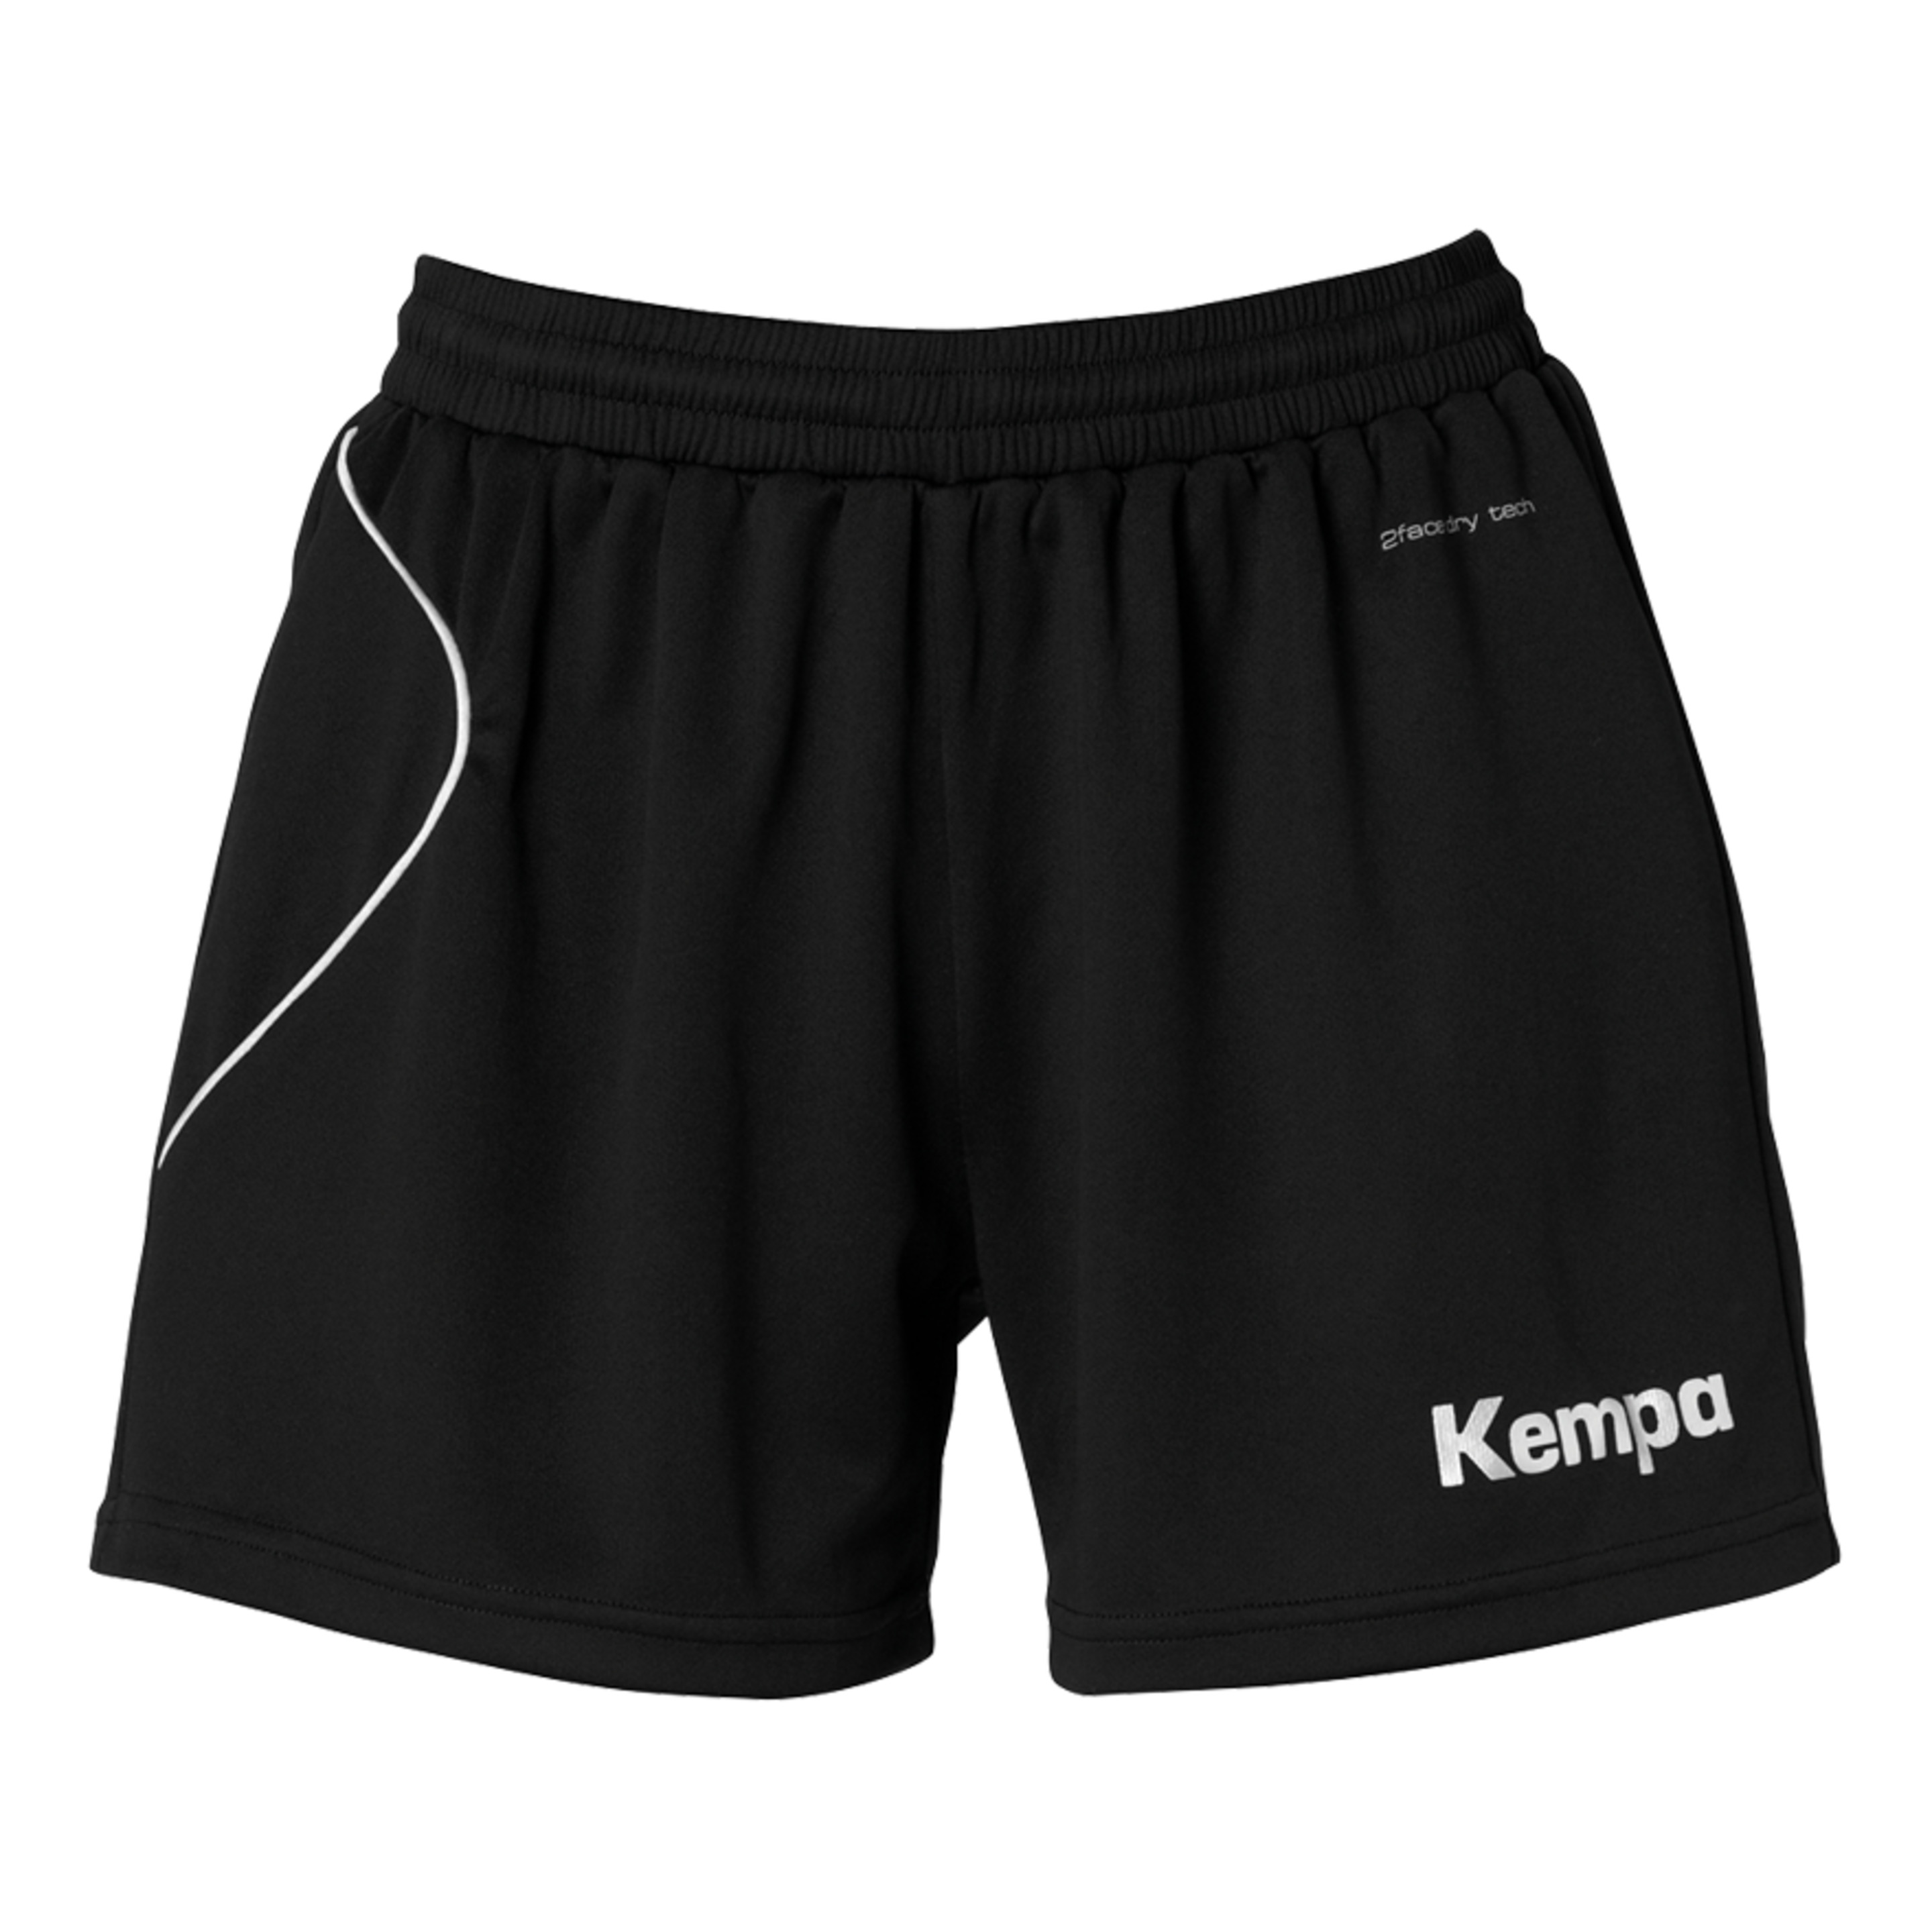 Curve Shorts De Mujer Negro/blanco Kempa